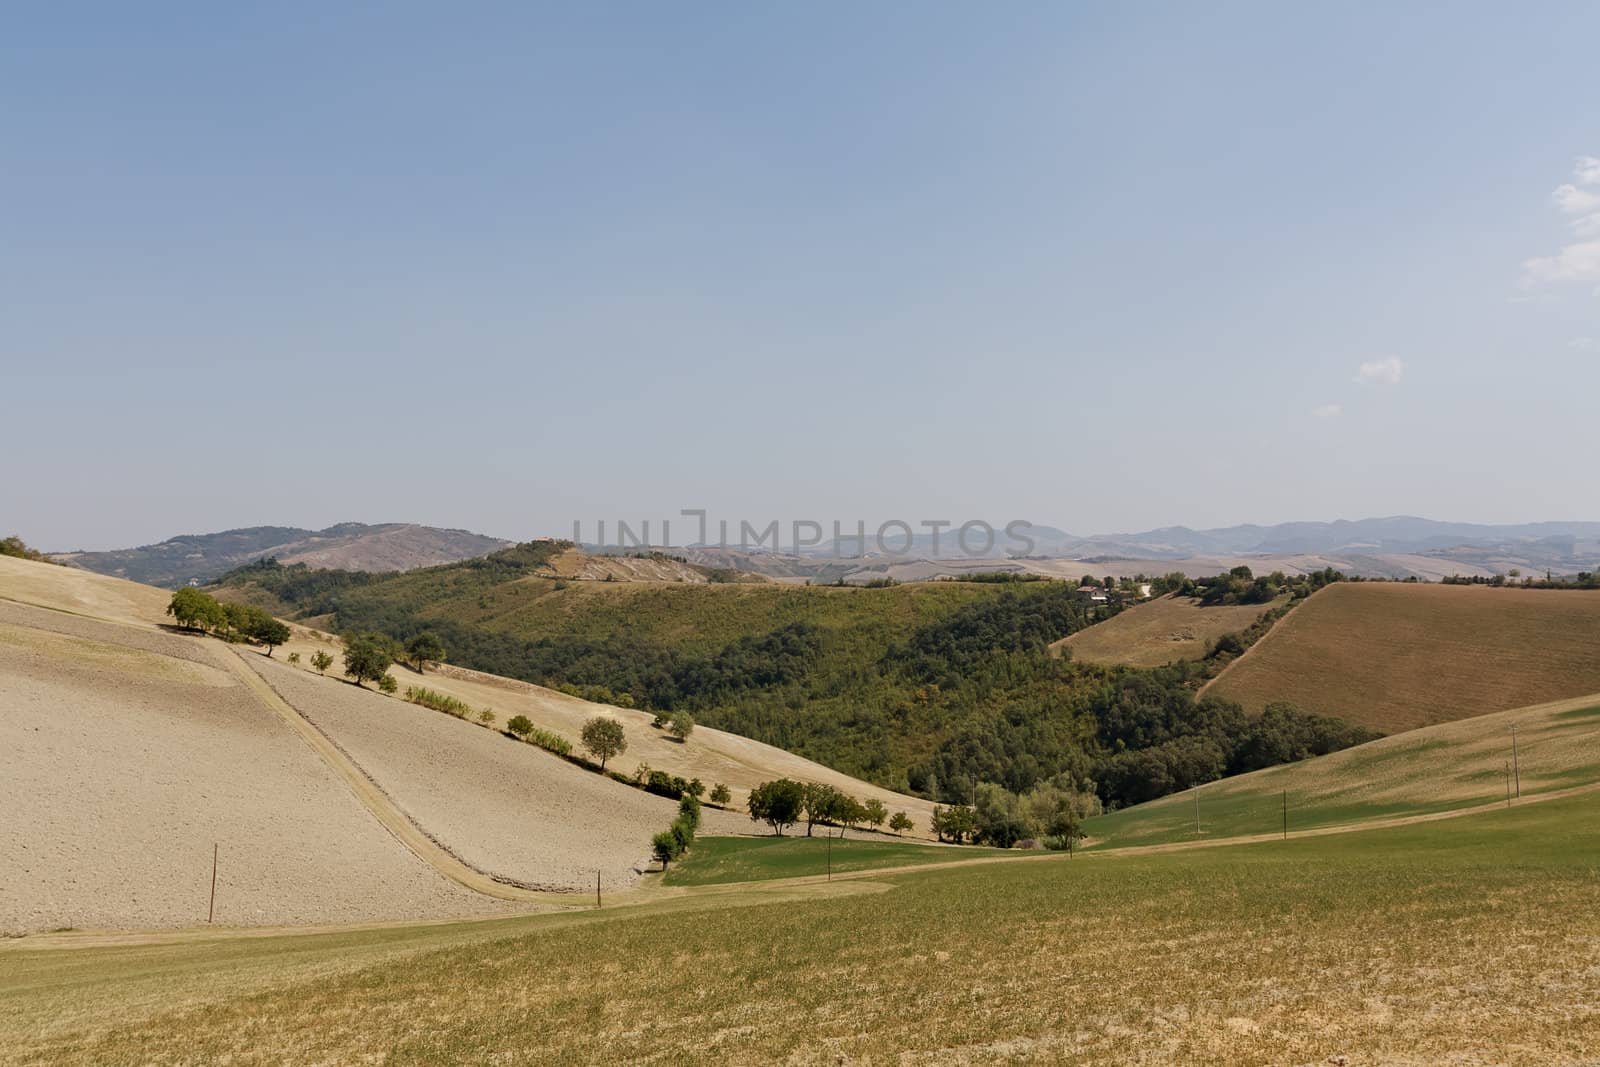 Landscape a rural field in Italy in a farm